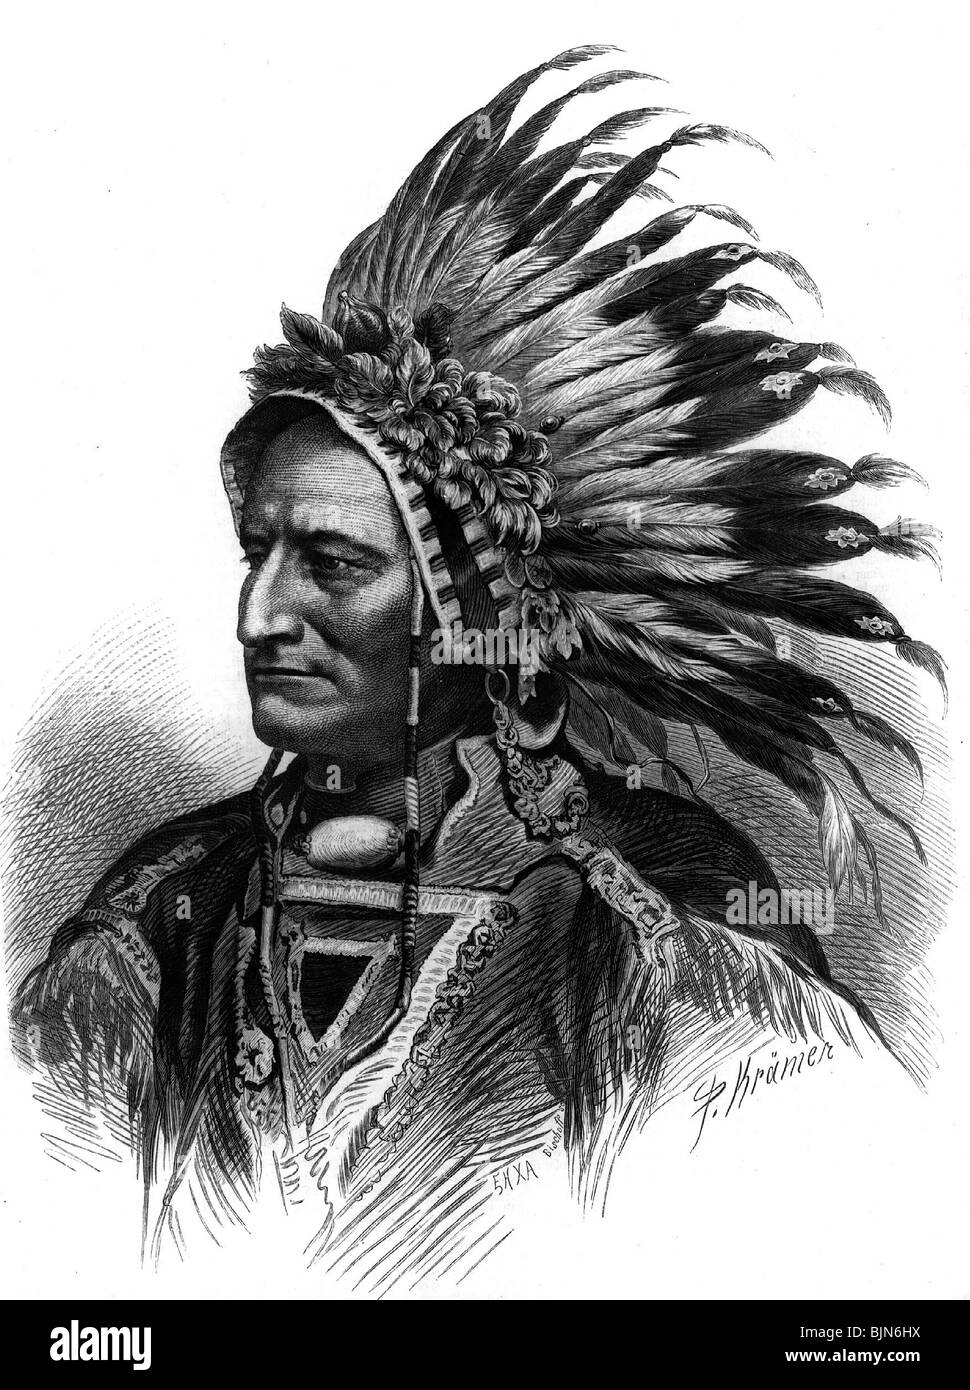 Geografia / viaggio, Stati Uniti d'America, indiani americani, capi, indiani Pawnee, Foto Stock